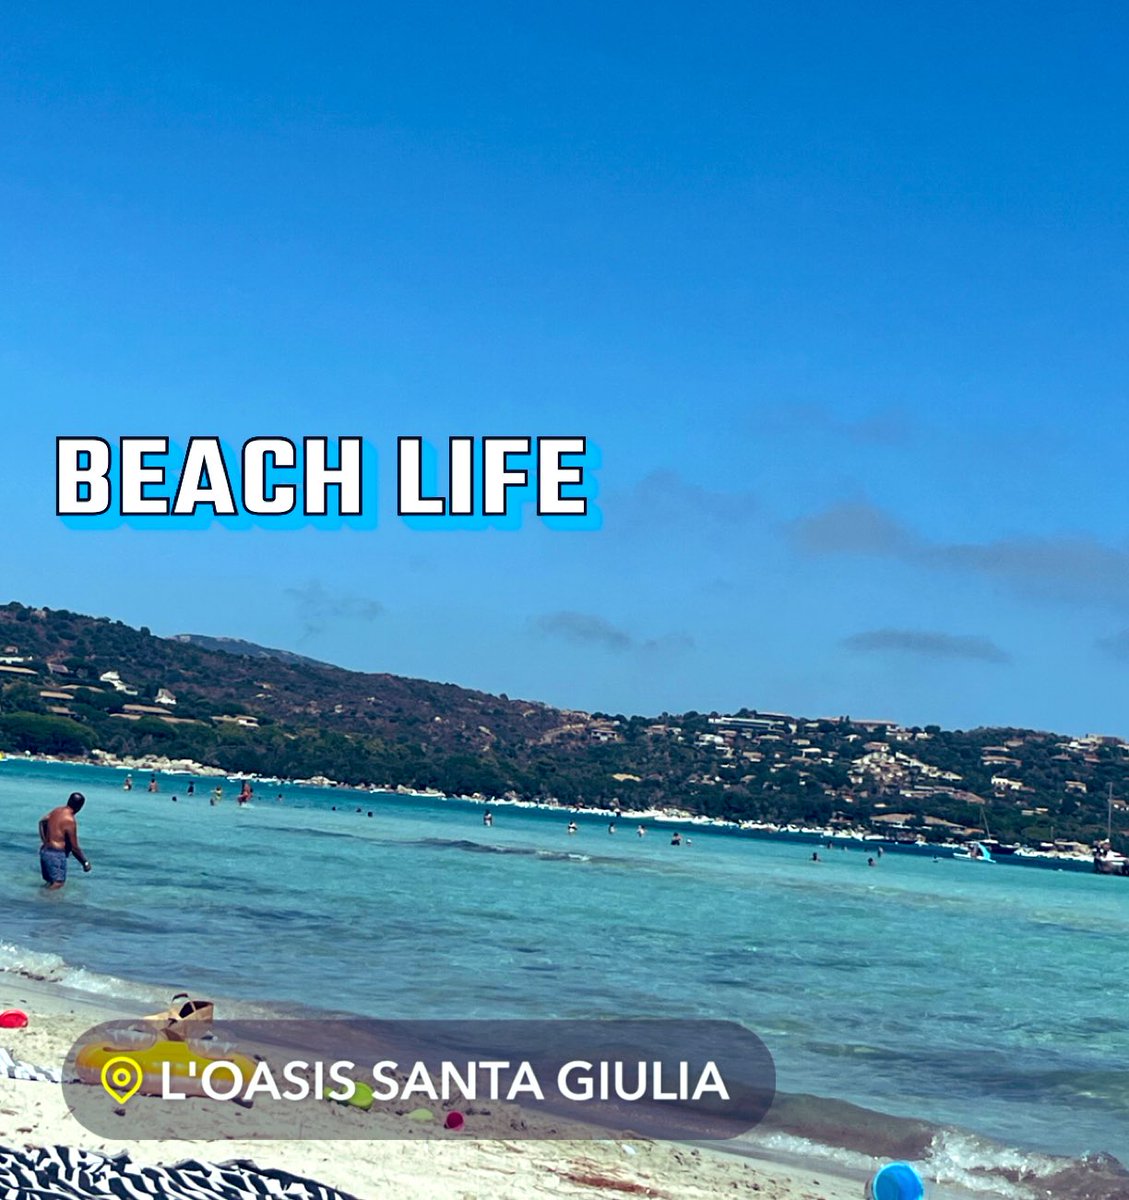 The most beautiful beach on the island! #Corsica #portovecchio #beachlife